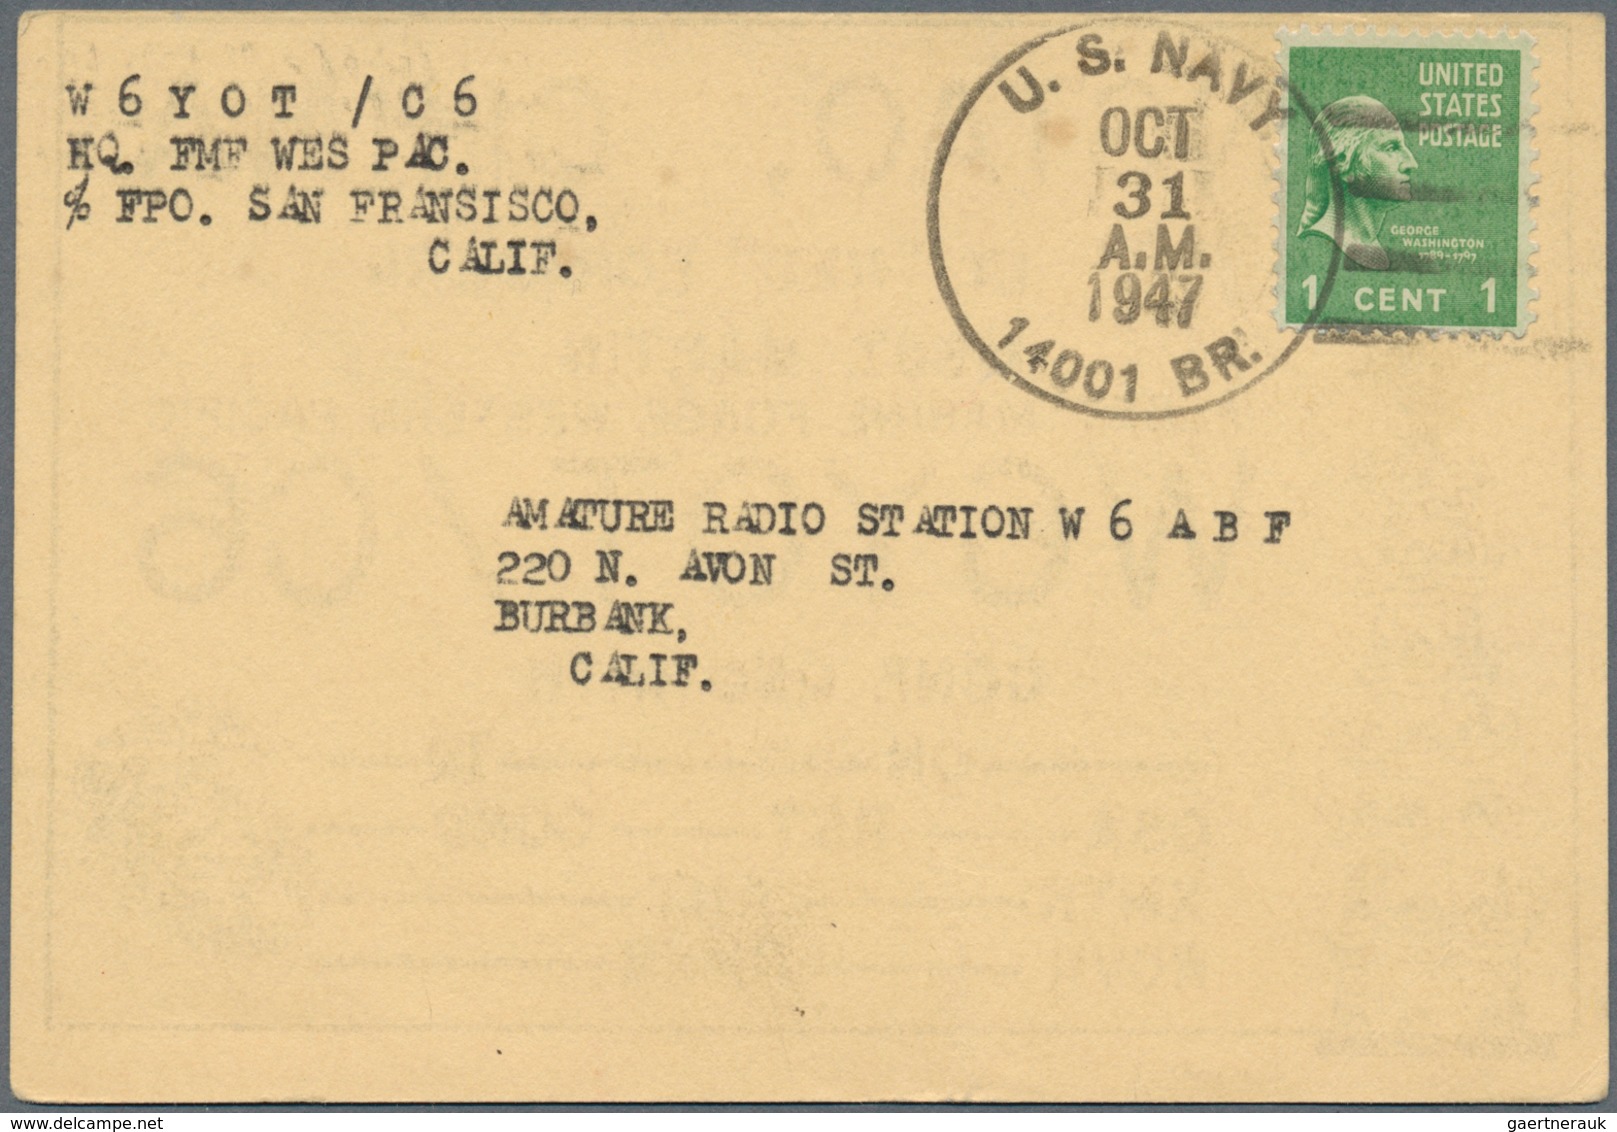 China - Fremde Postanstalten / Foreign Offices: 1936/48, US navy p.o. in Tsingtau entires (13): Simp